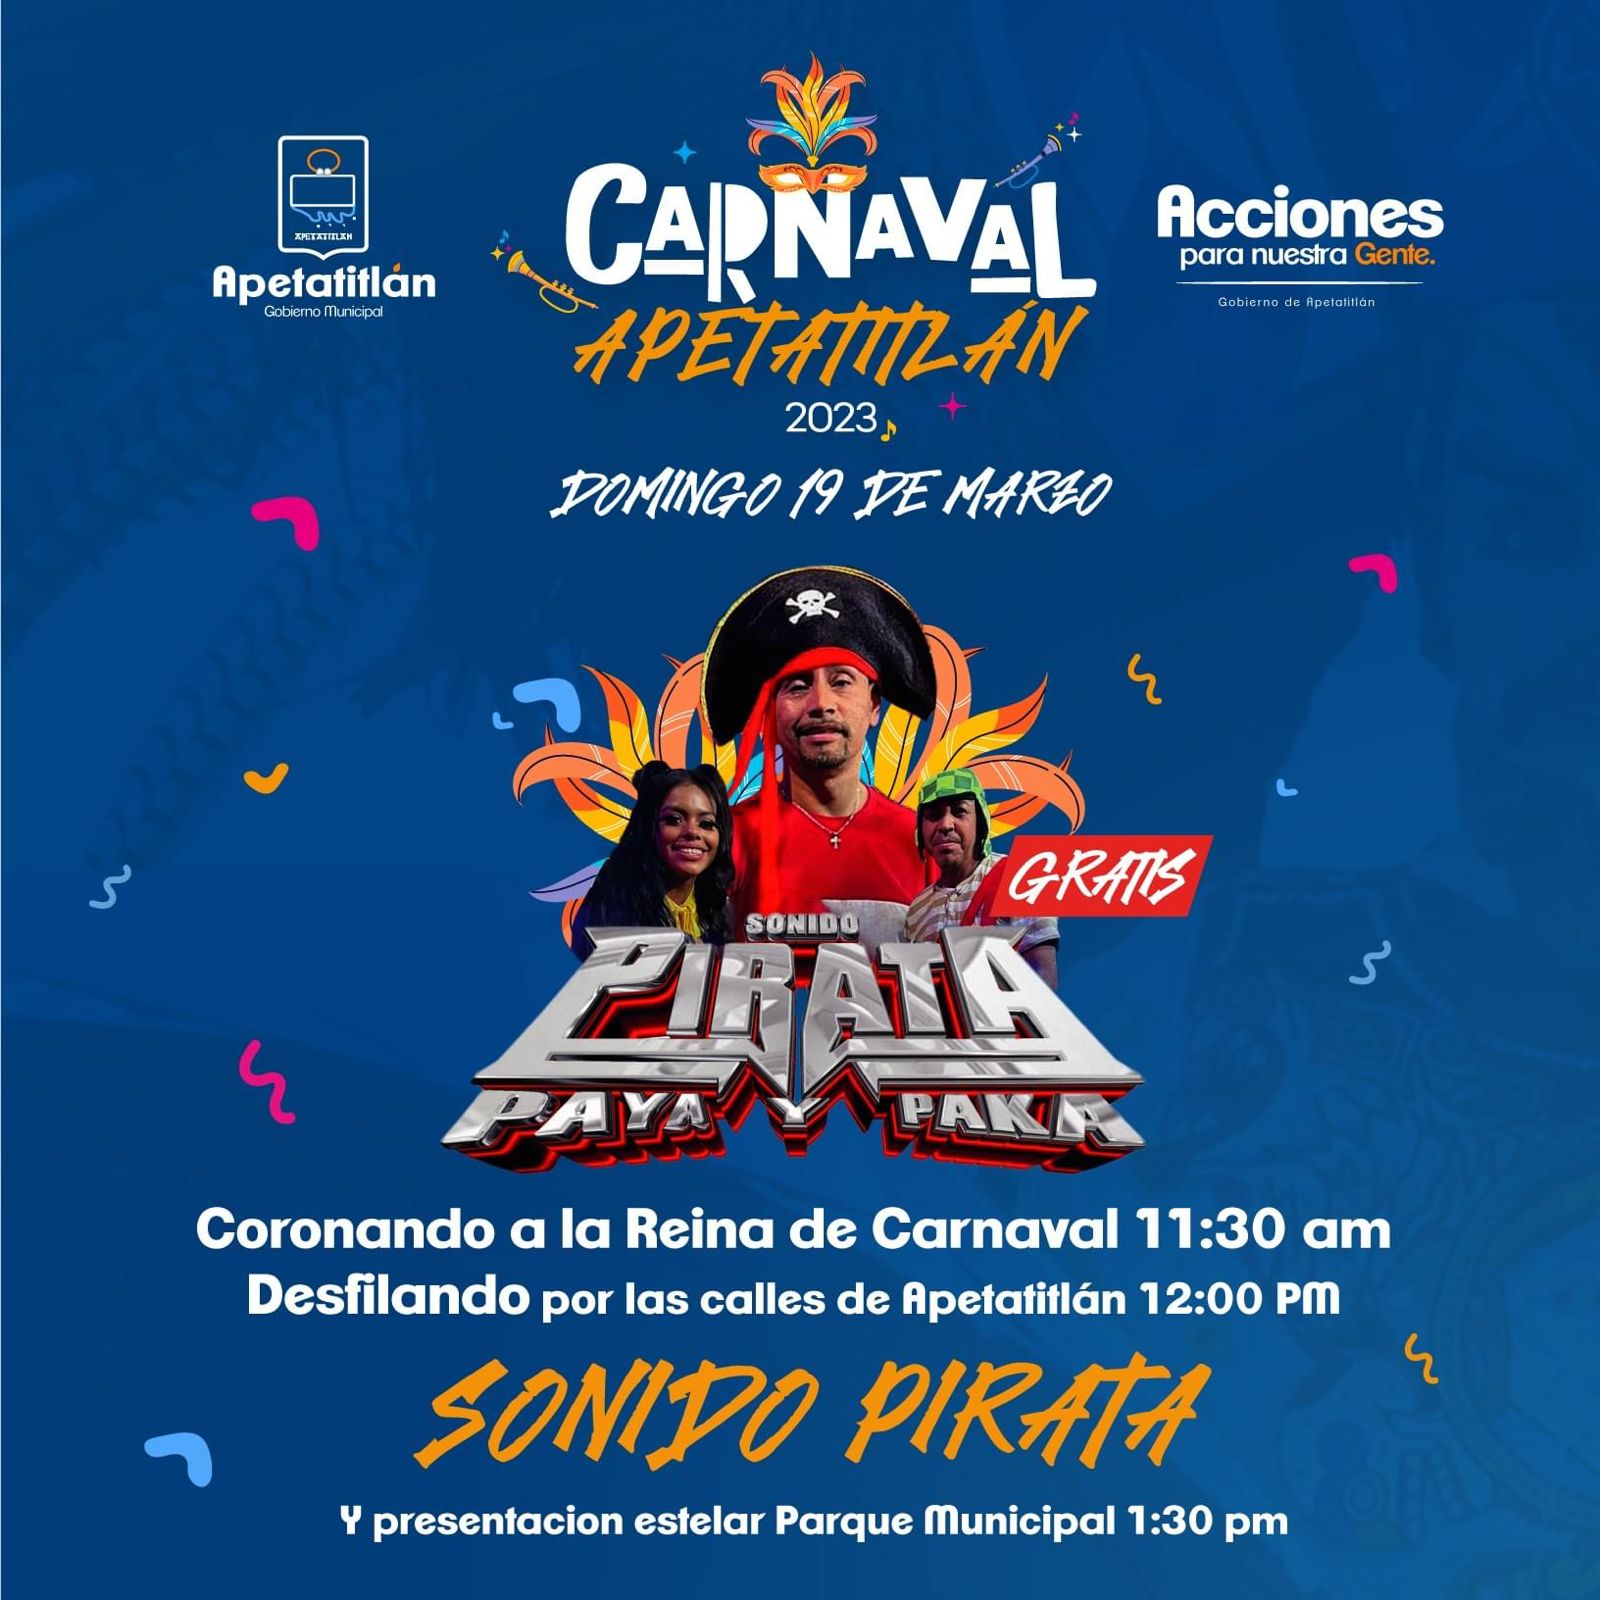 Sonido Pirata amenizará el desfile de carnaval Apetatitlan 2023